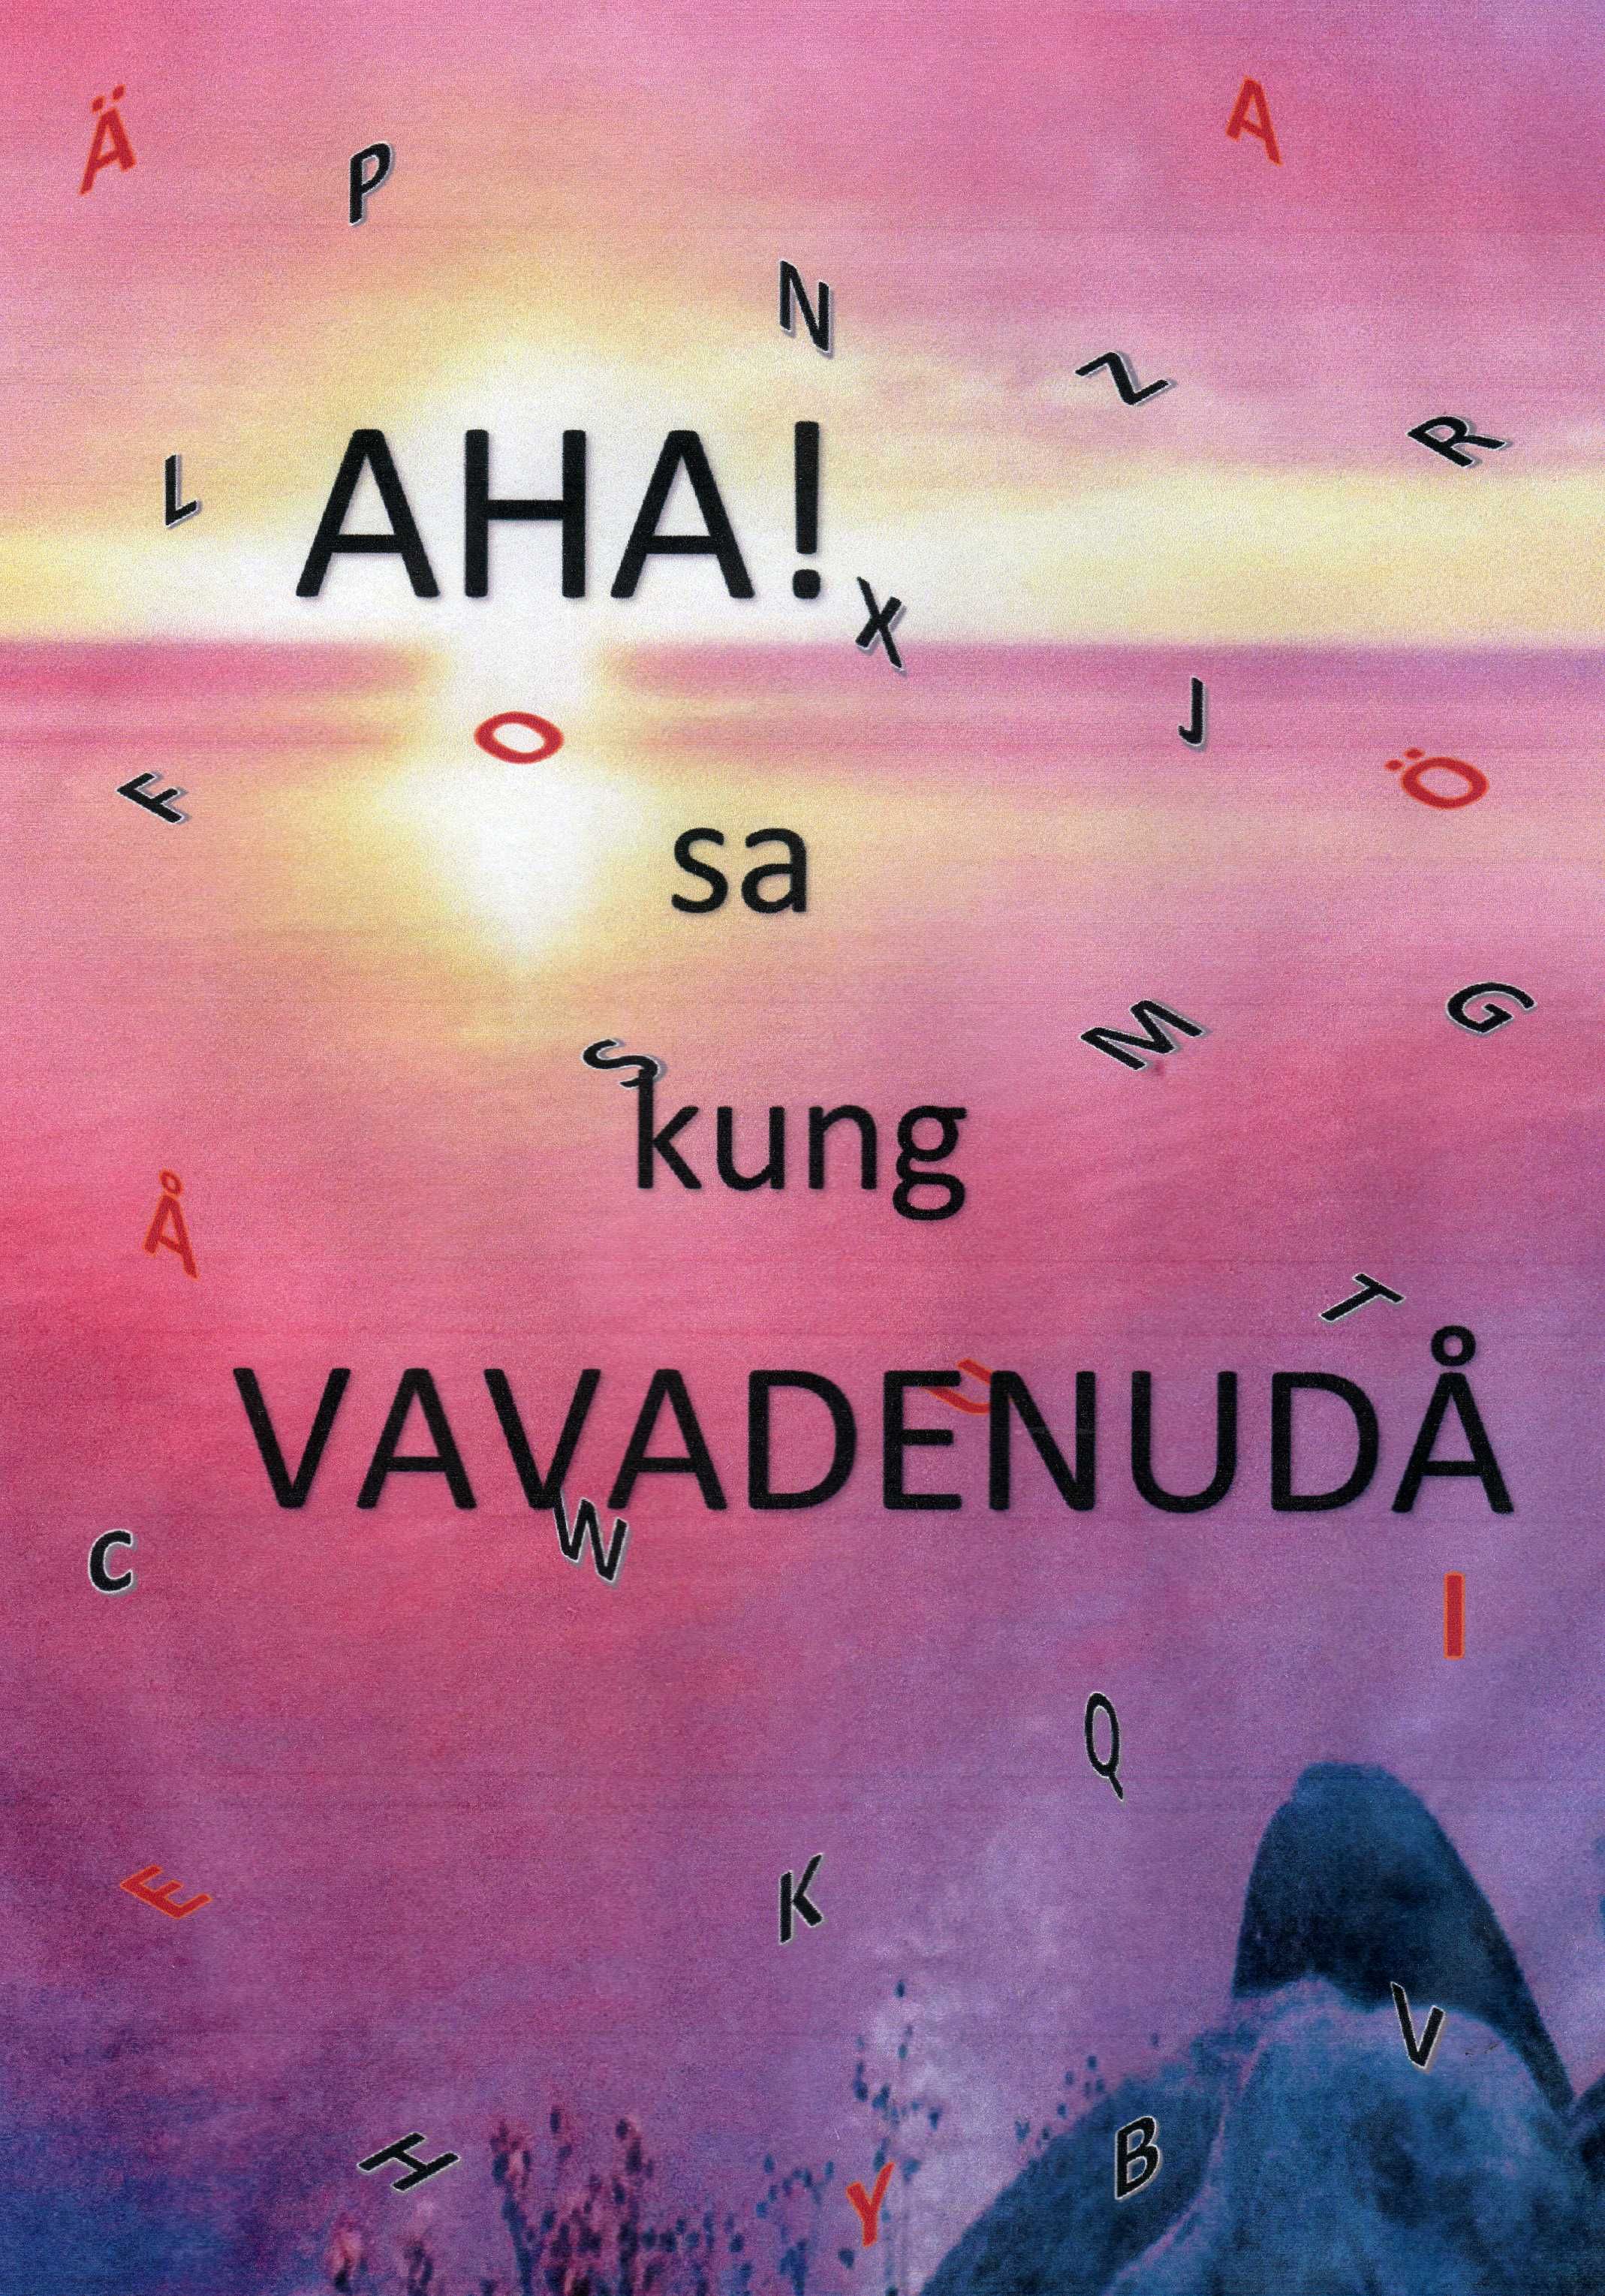 AHA! sa kung VAVADENUDÅ, e-bok av Marianne Gutler Lindström